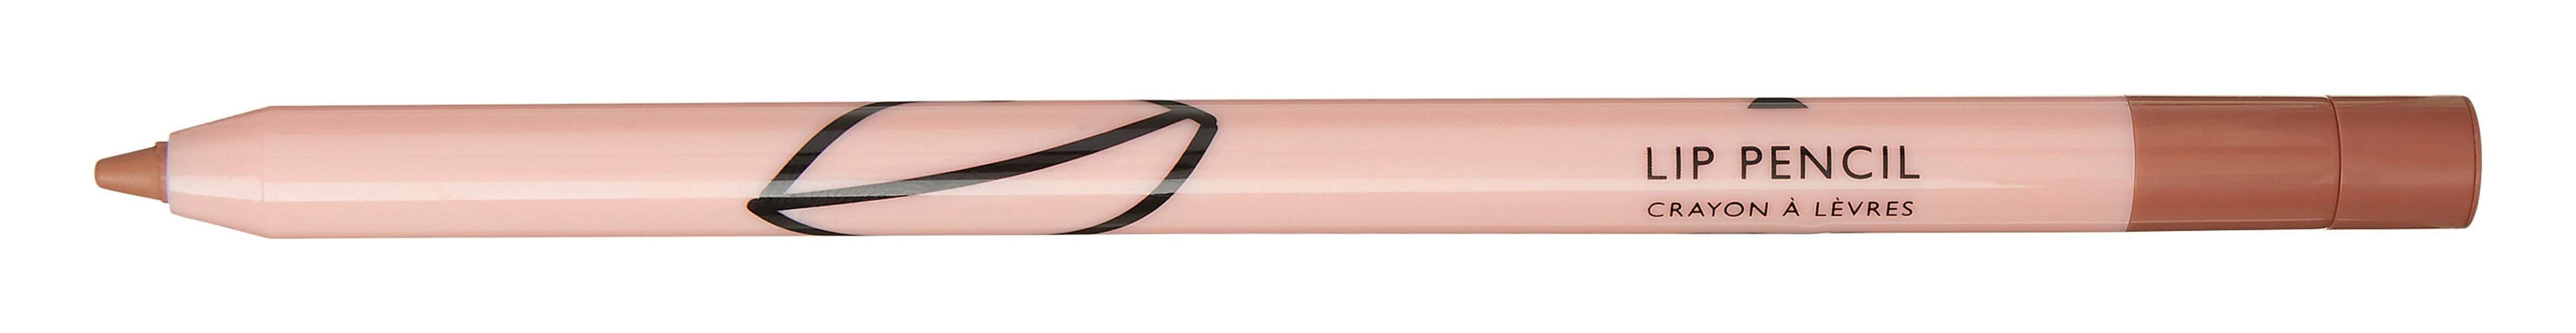 Crayon à lèvres nude Sturdy, ASOS Make-up, 6,99€